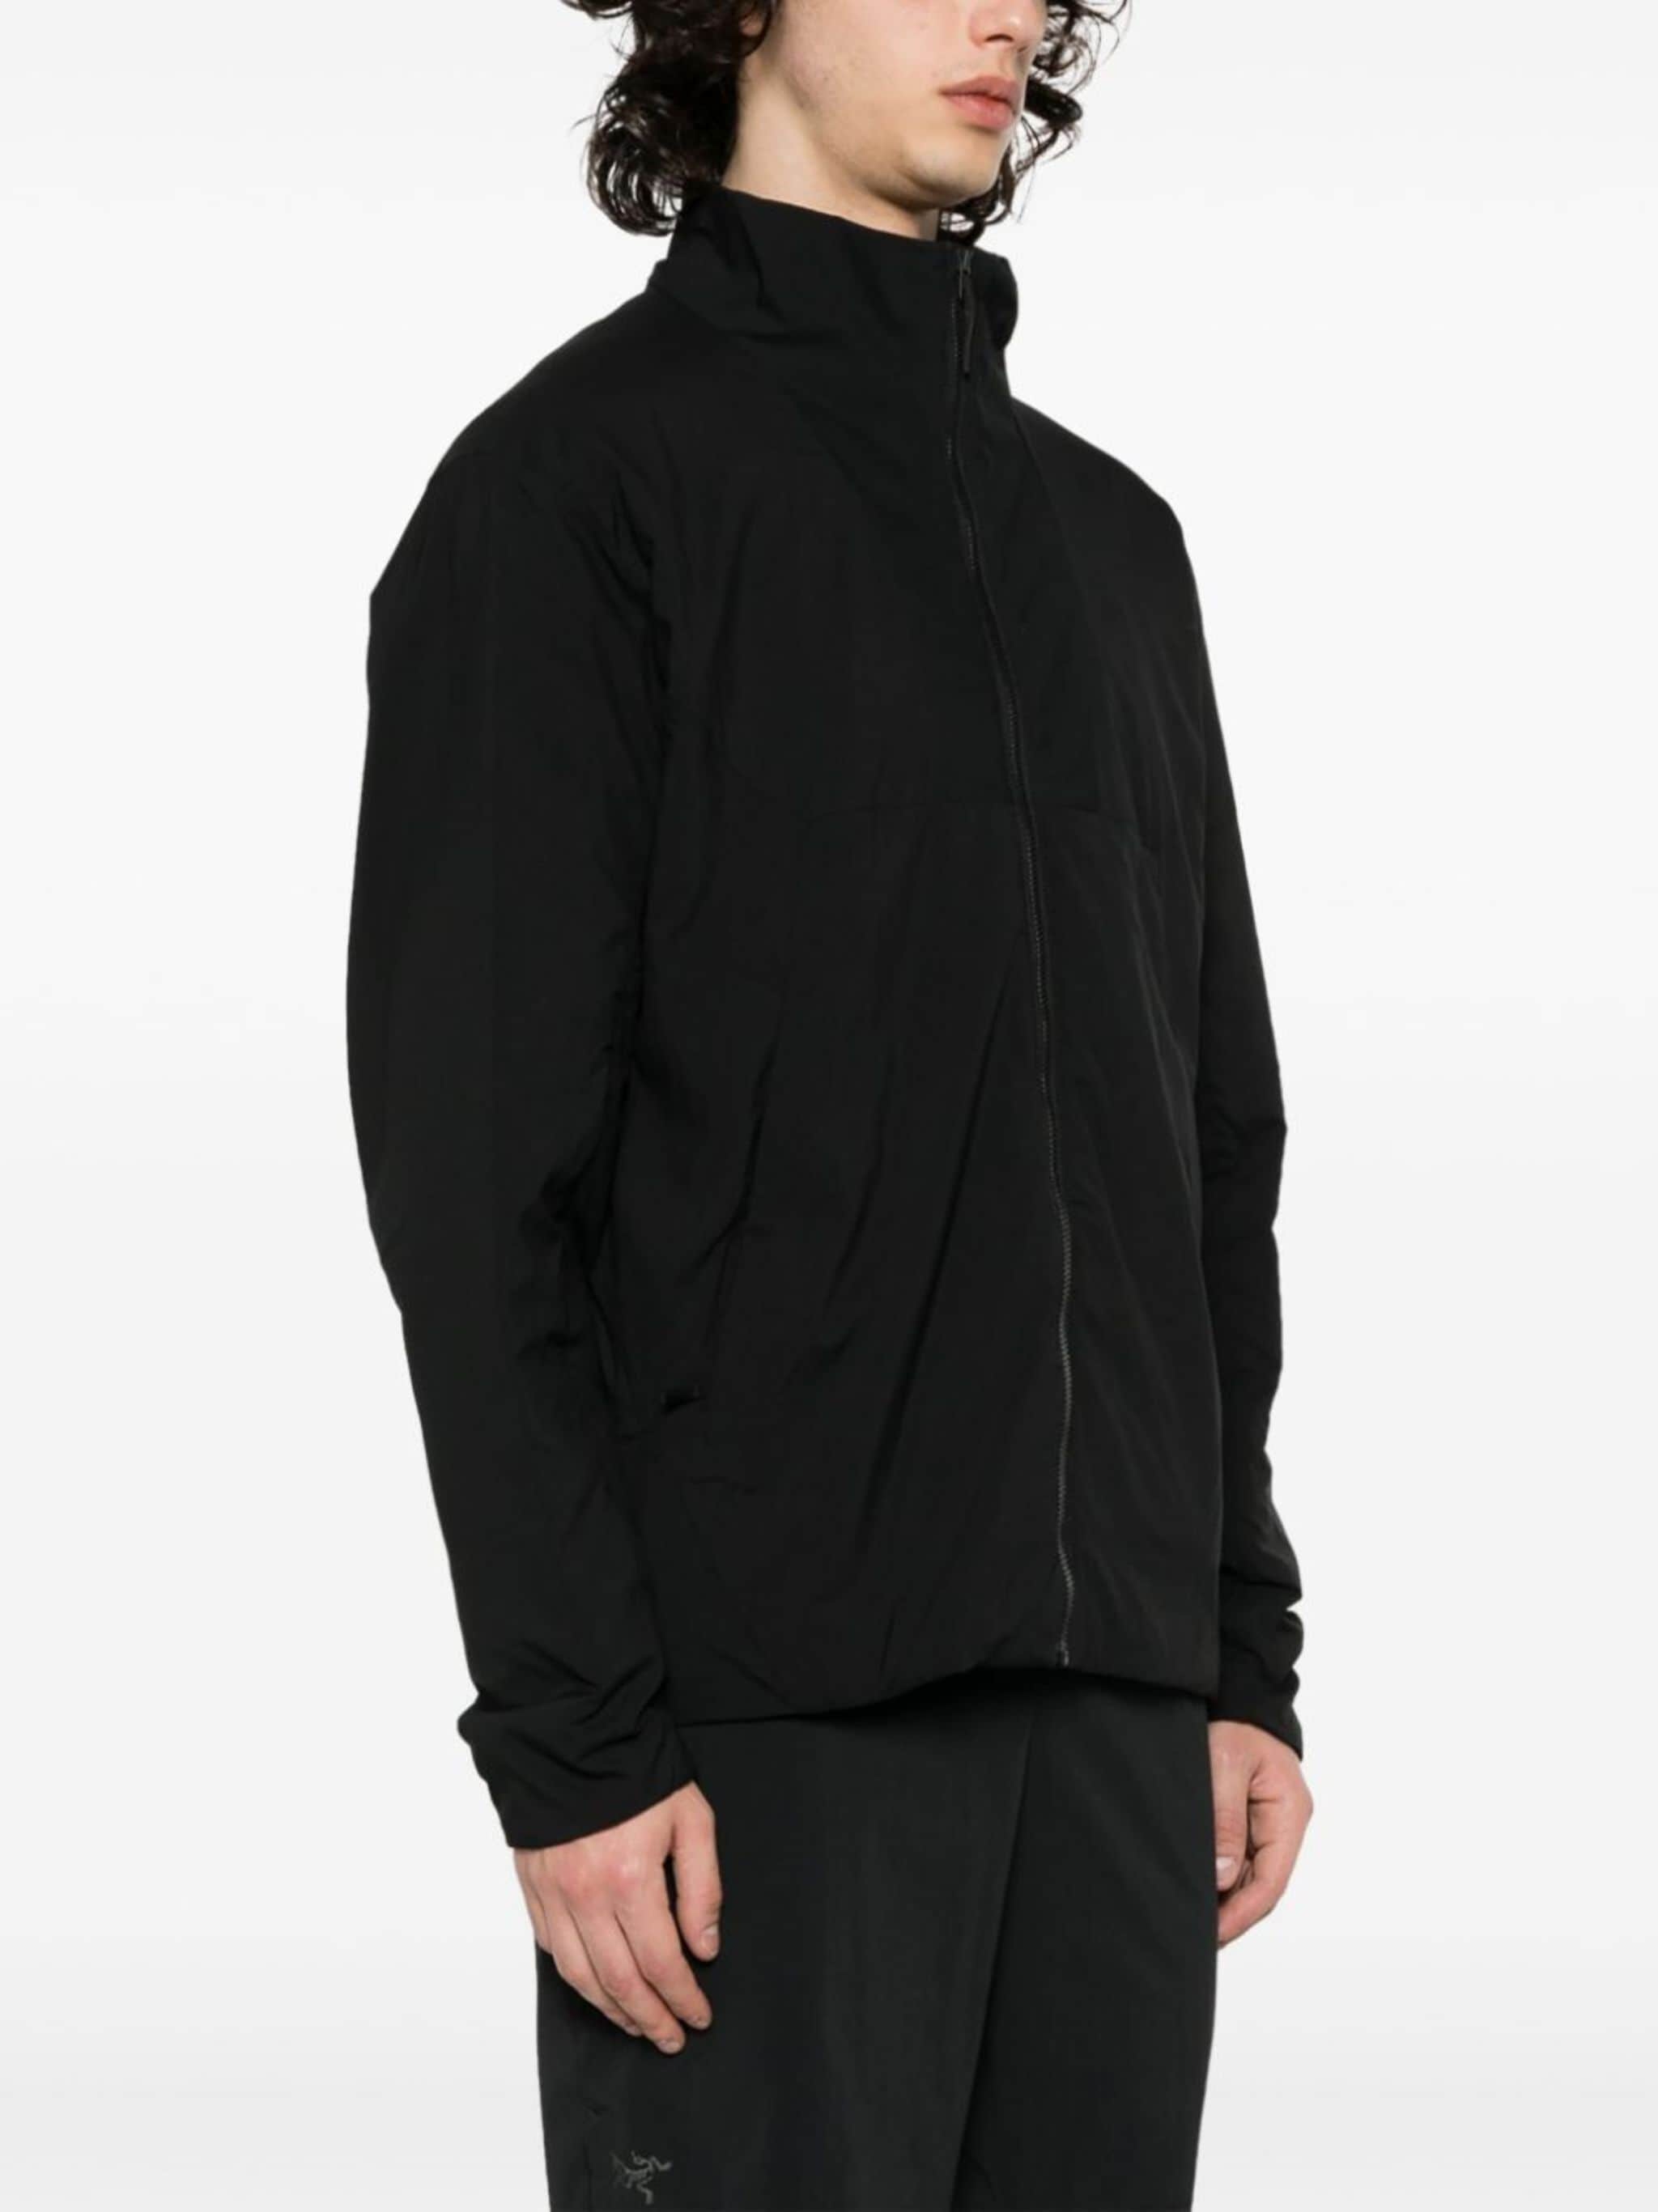 Mioon lightweight jacket - 3